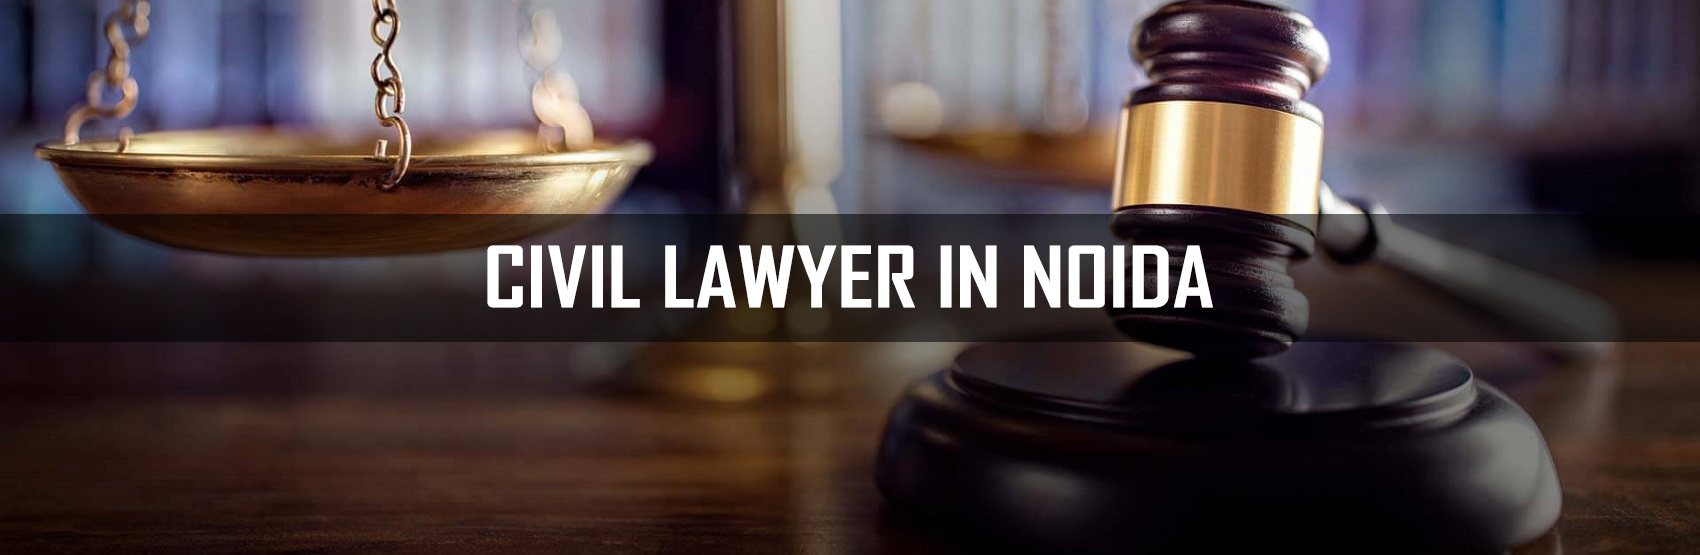 Civil Lawyer in Noida, Greater Noida, Ghaziabad, Meerut & Hapur